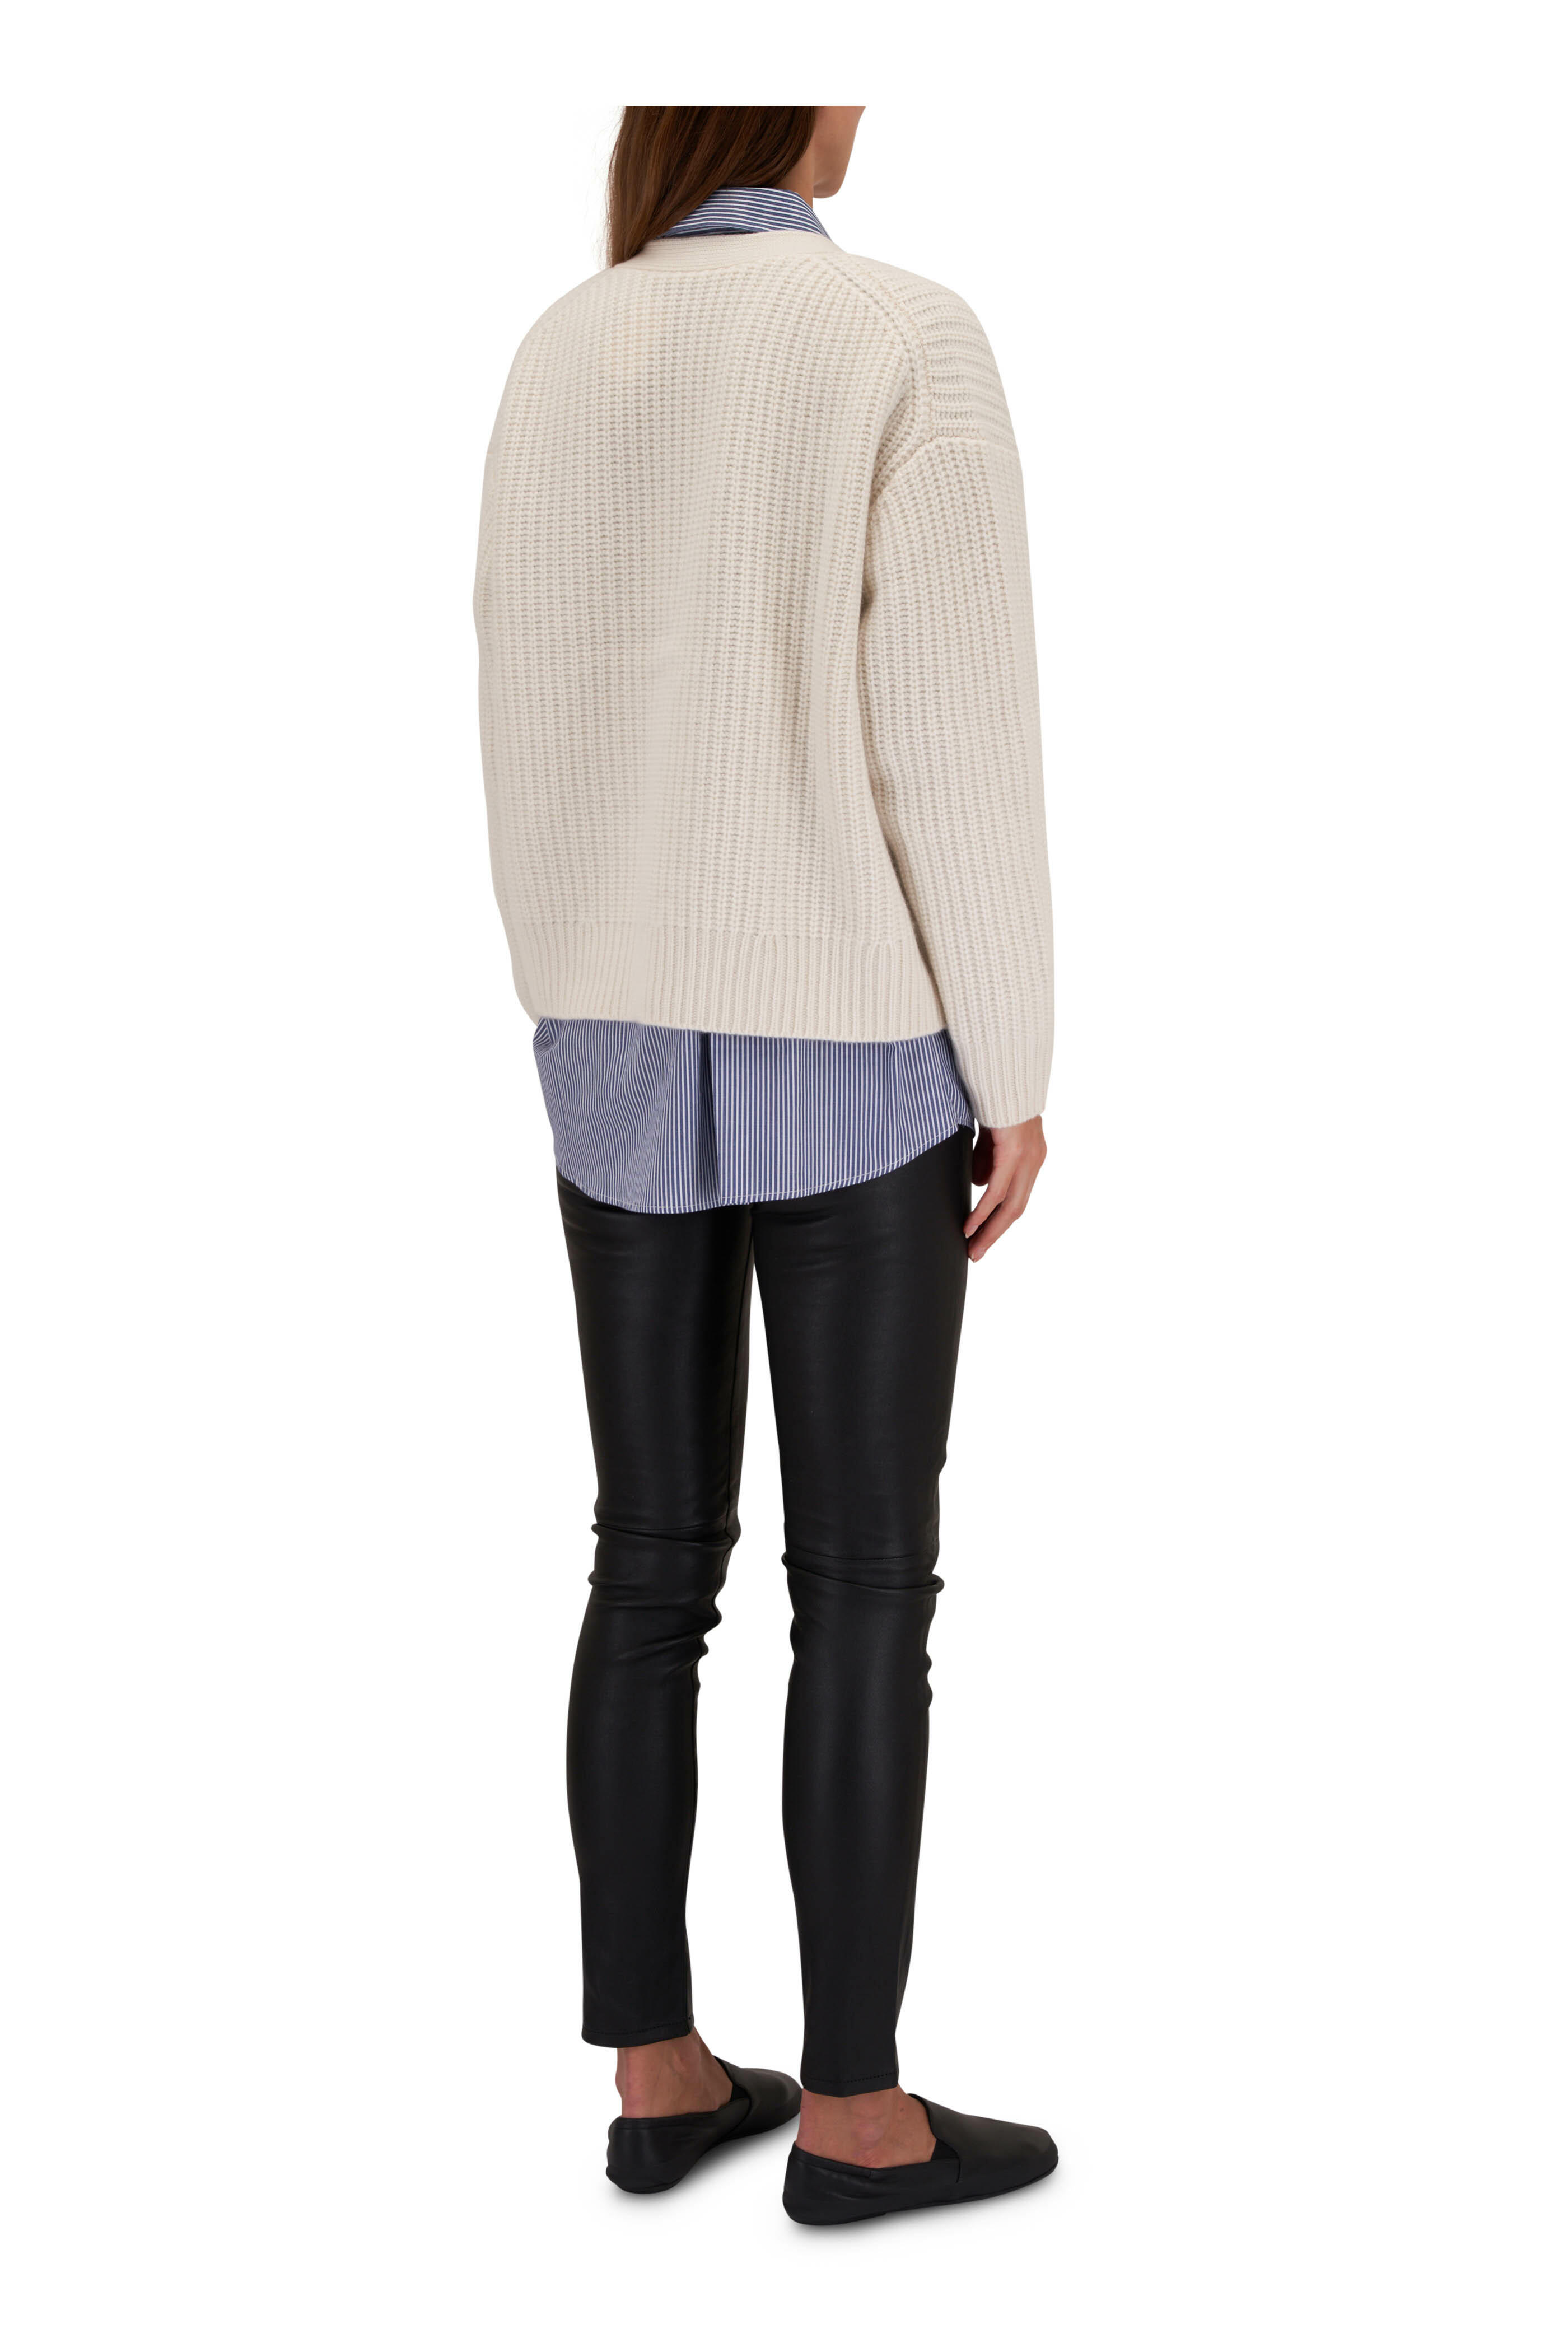 Nili Lotan - Trina Cashmere Sweater Ivory/Dark Navy Stripe M